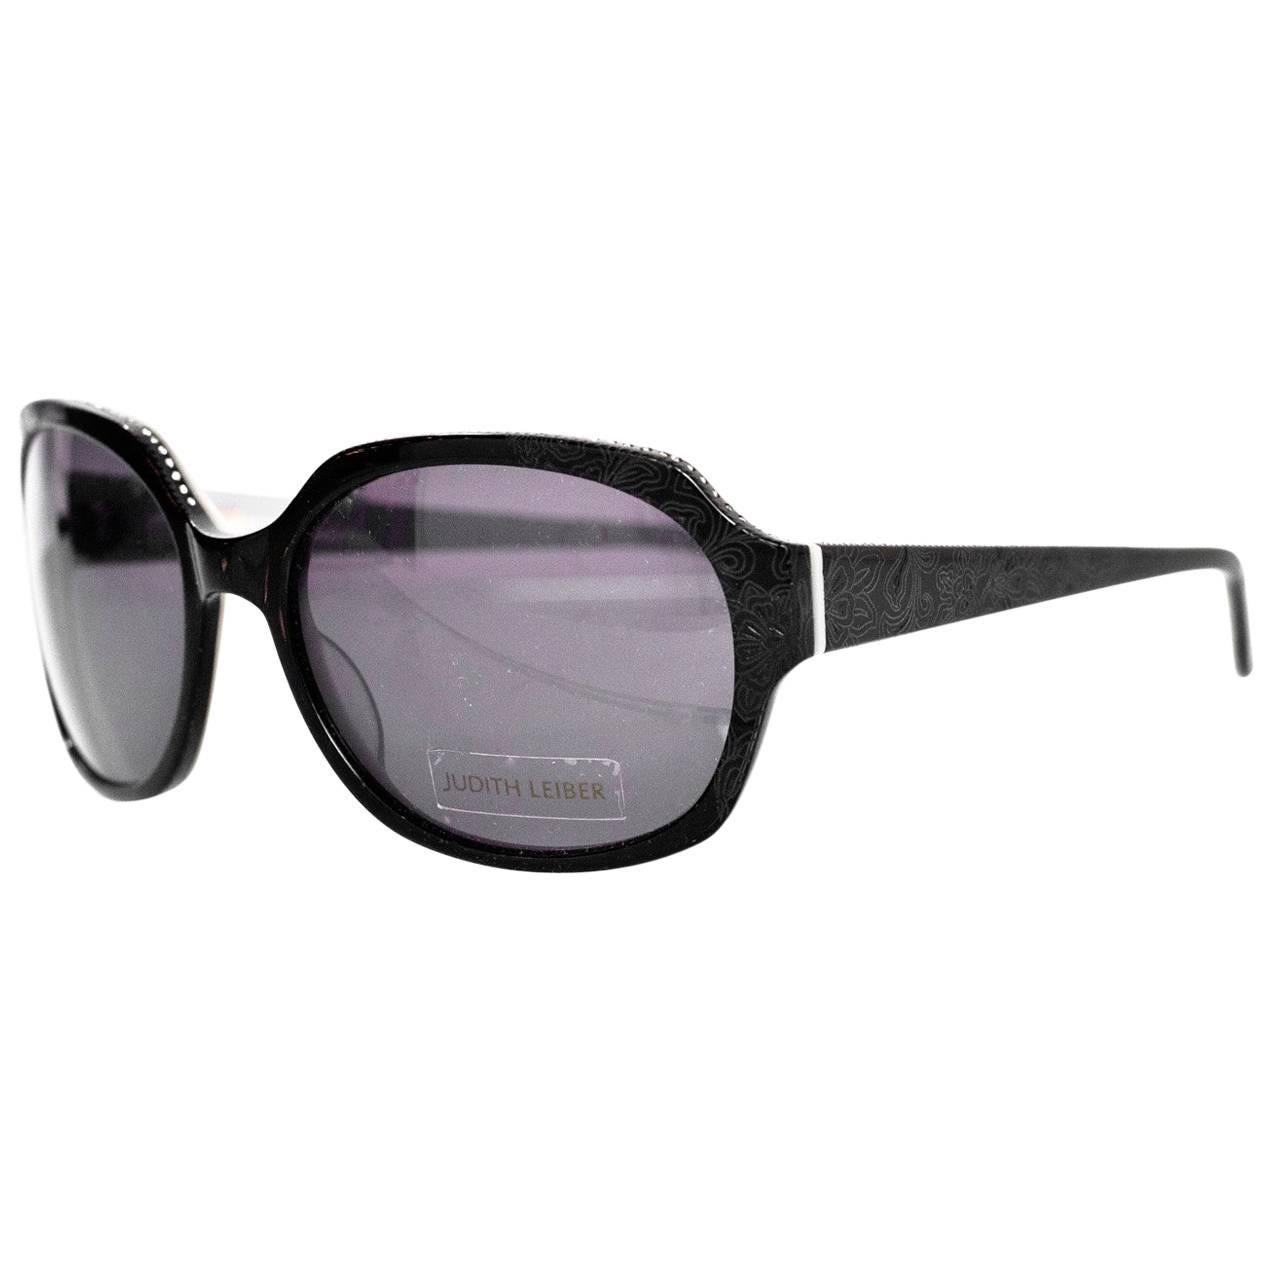 Judith Leiber JL1169 Black Swarovski Crystal Sunglasses with Case